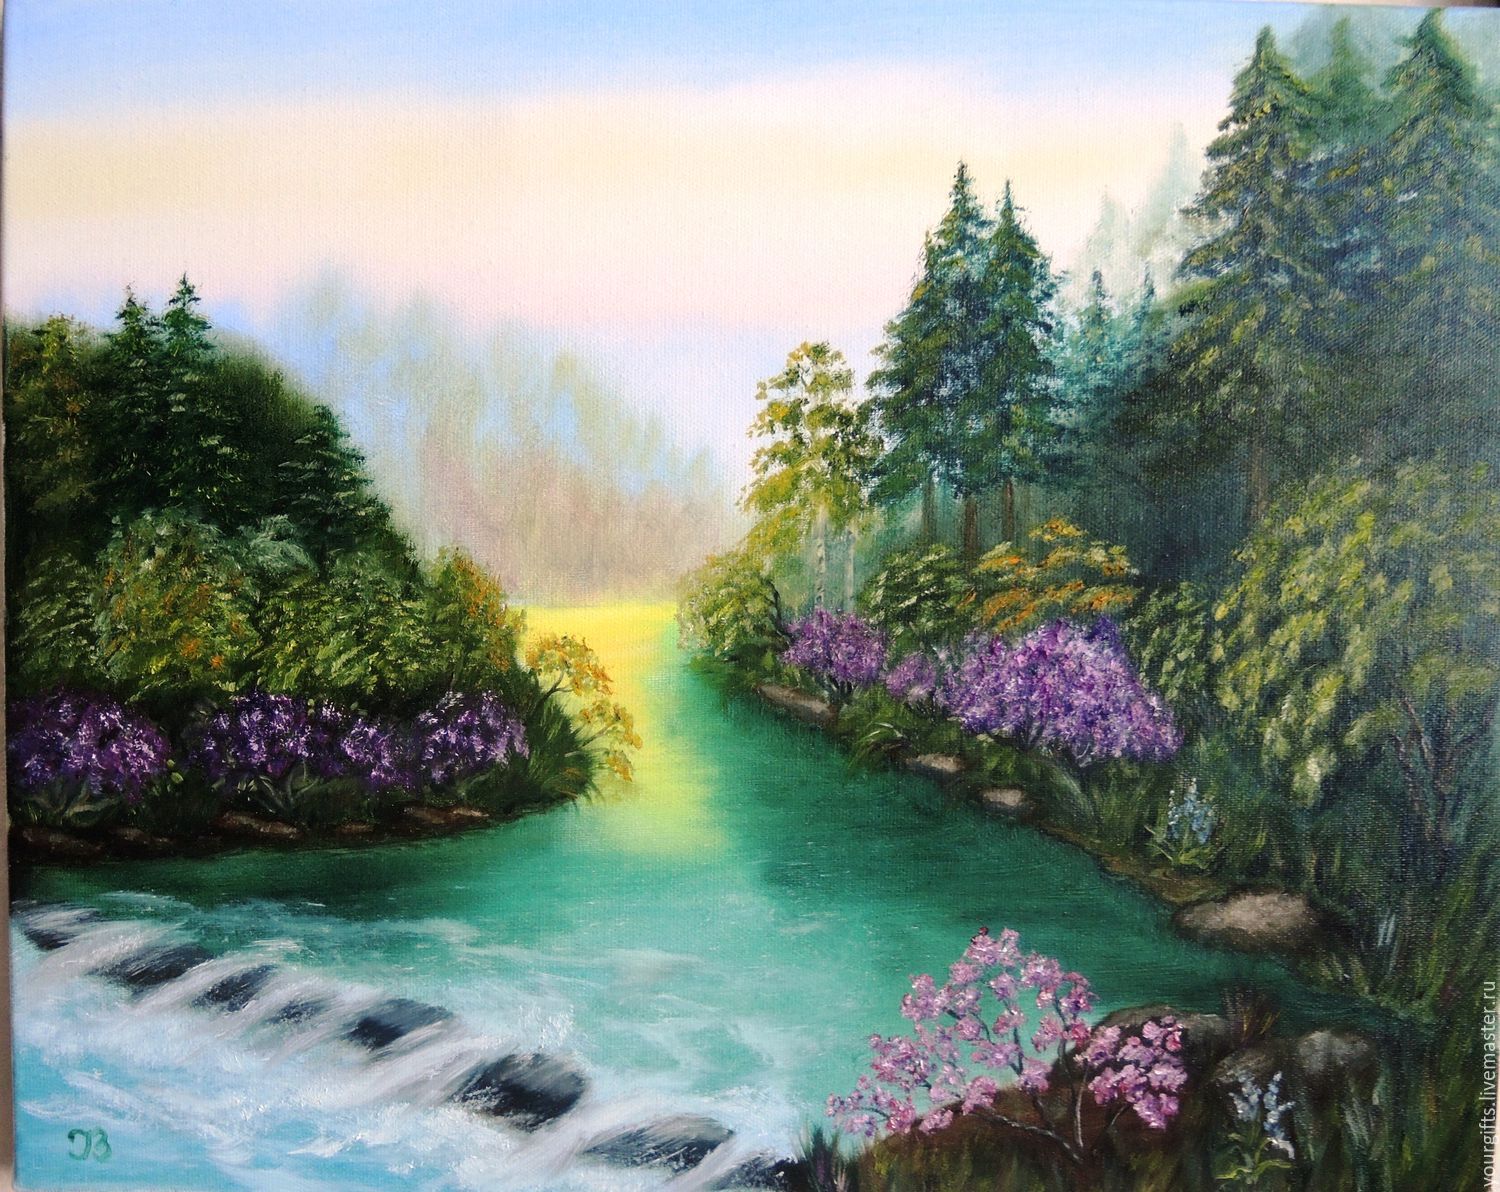 Forest River Oil Painting купить на Ярмарке Мастеров Cd2v9com